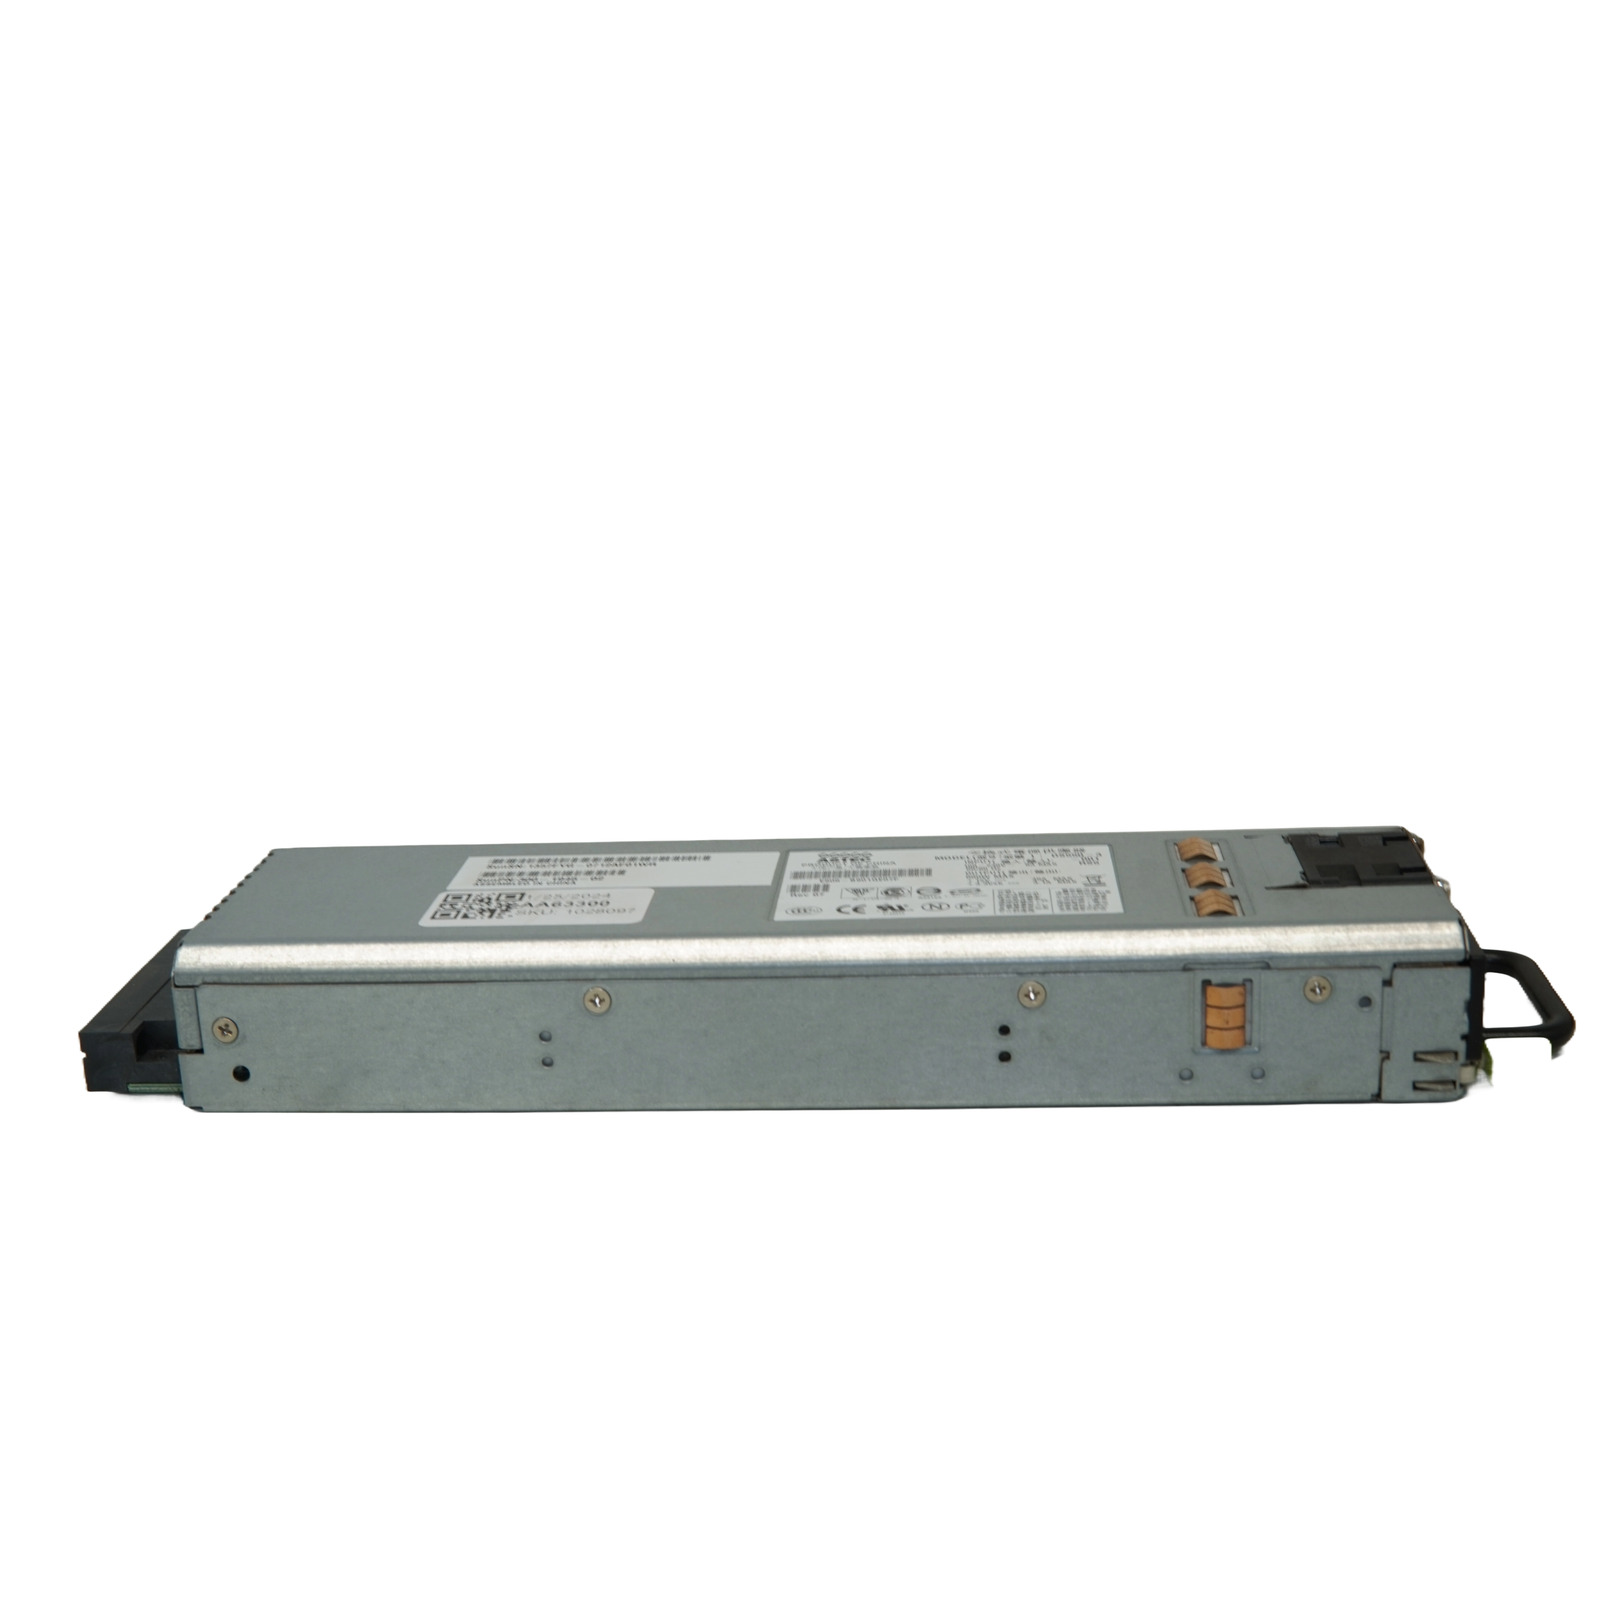 SUN / Astec 550W Server Power Supply DS550-3 / 300-1945-02